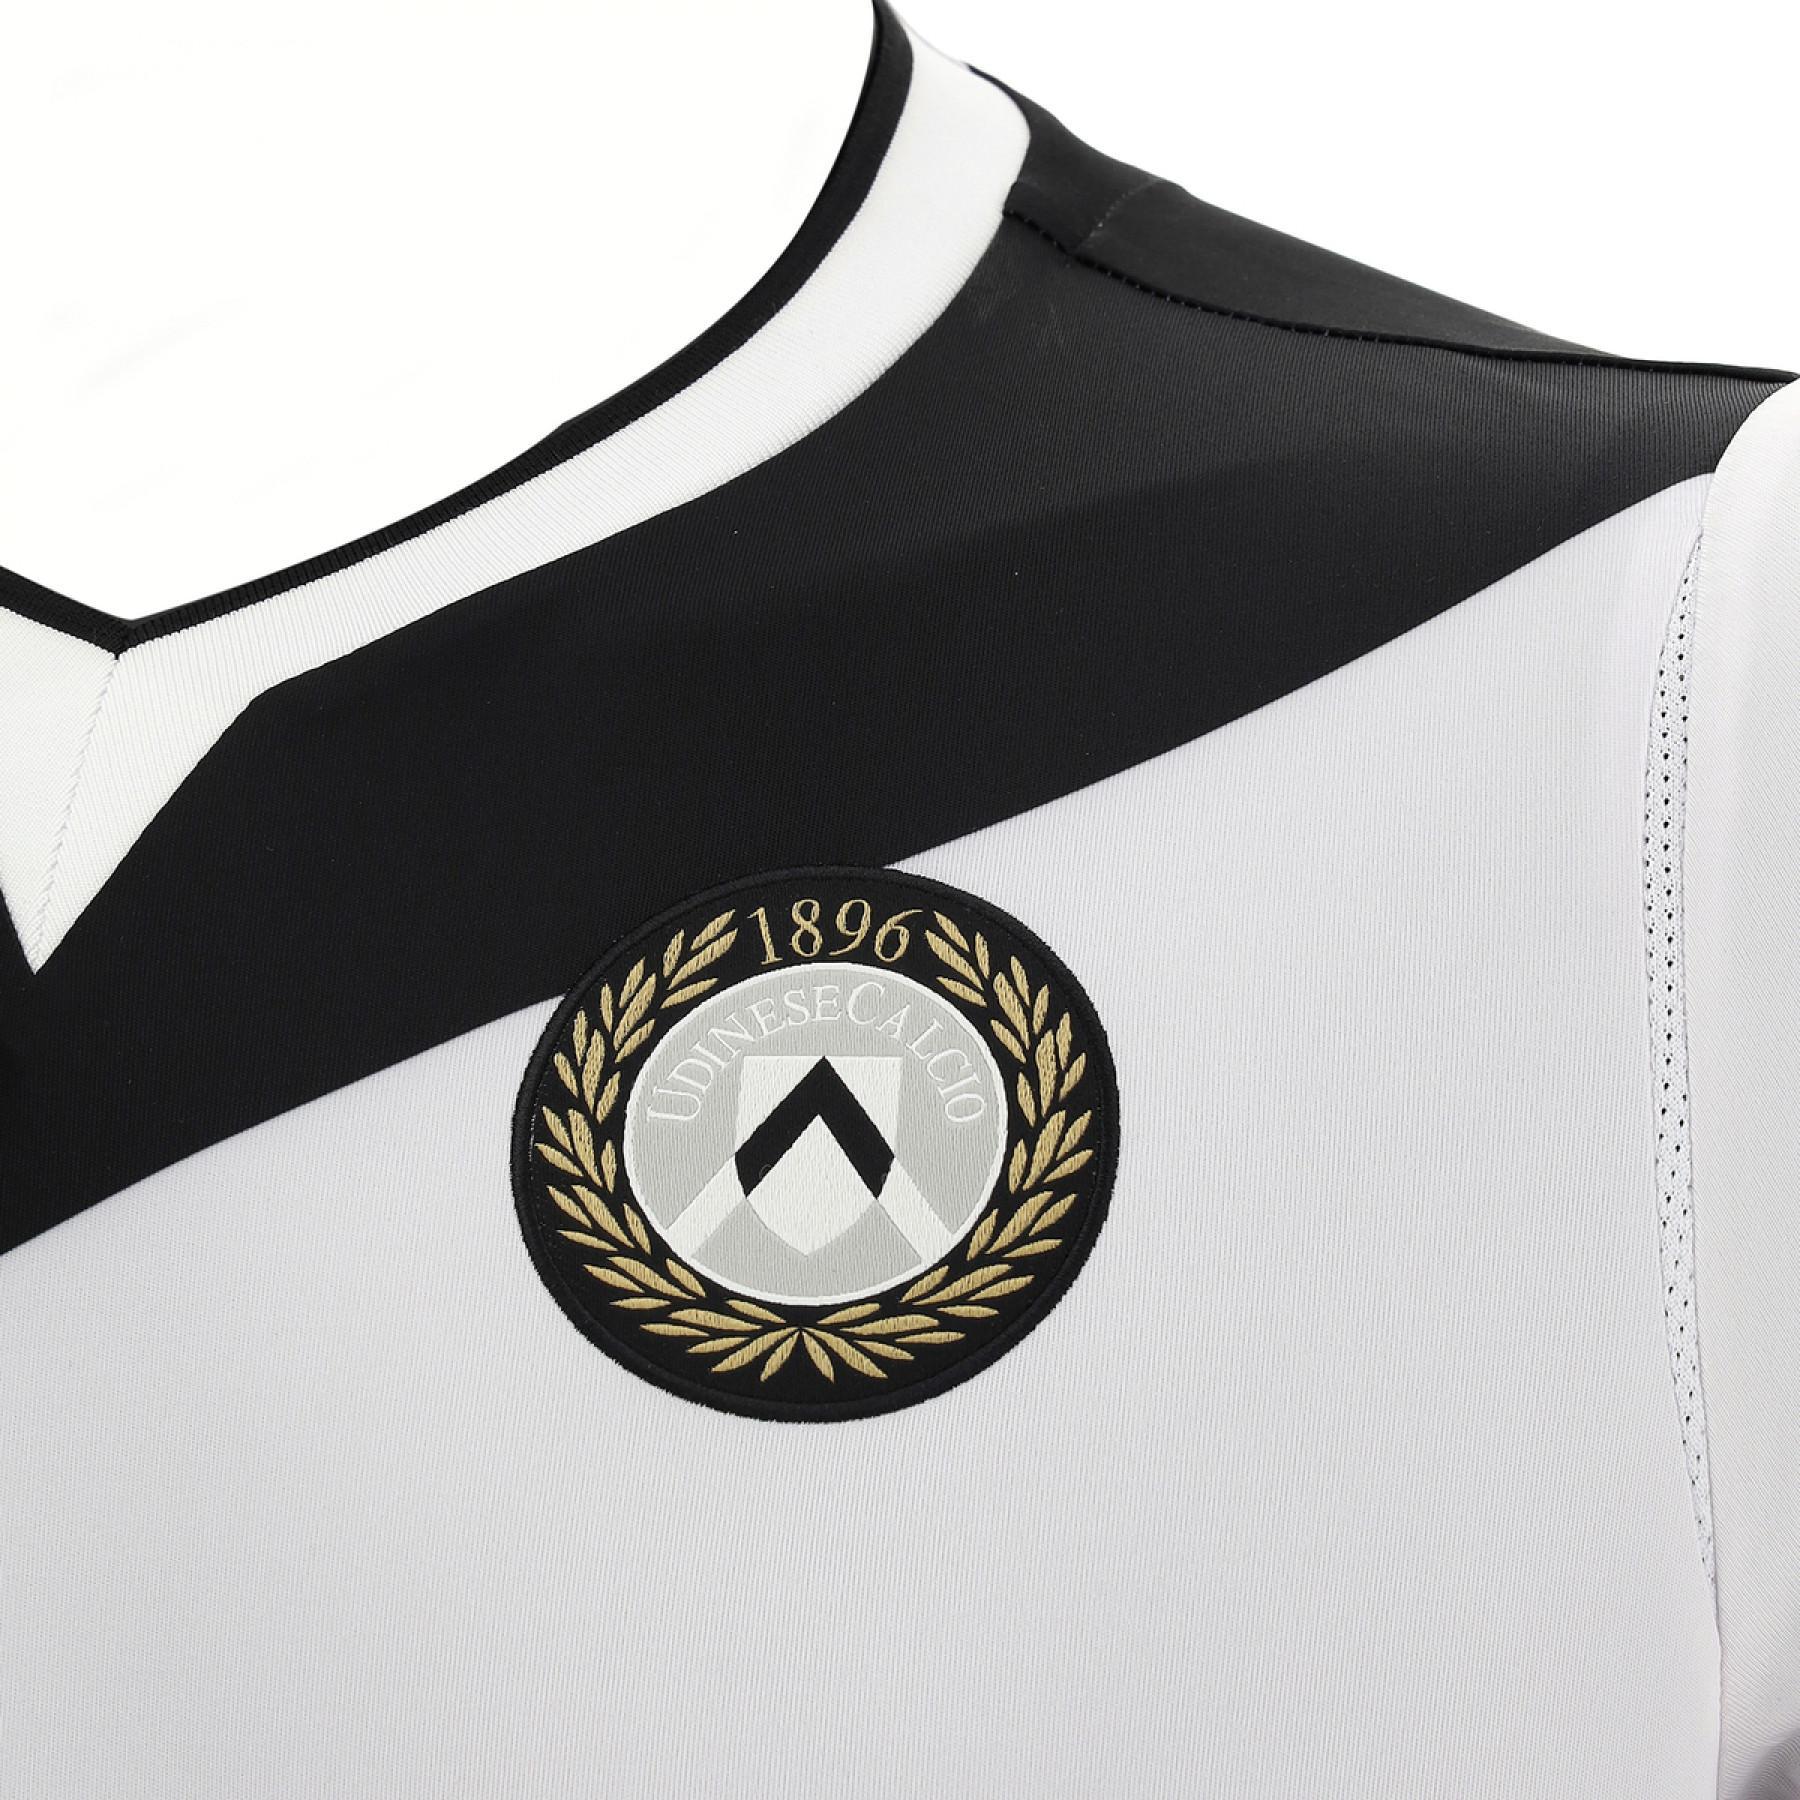 Camiseta primera equipación Udinese calcio 2020/21